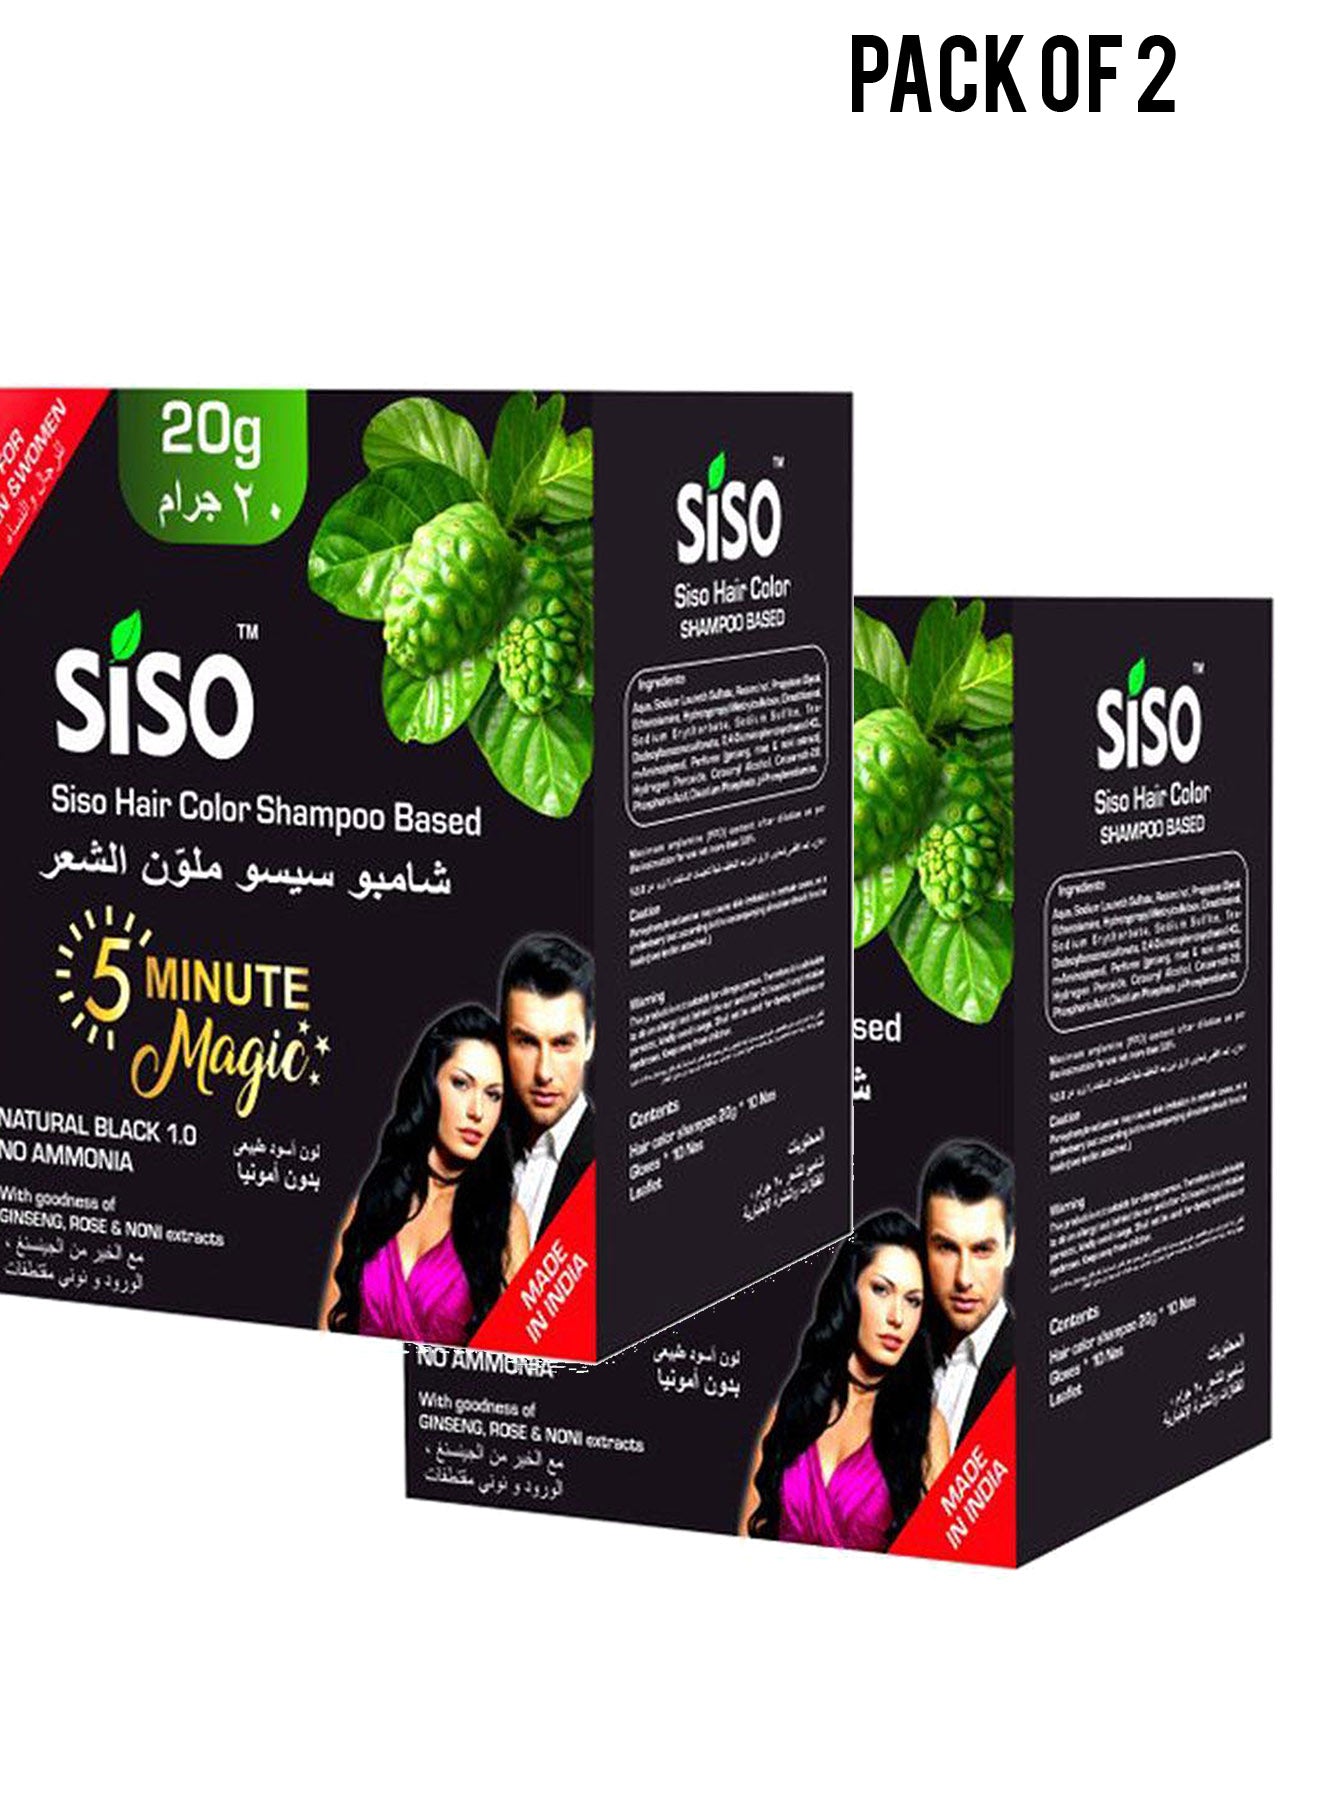 Siso Hair Color Shampoo Based 20g x10sachets Value Pack of 2 